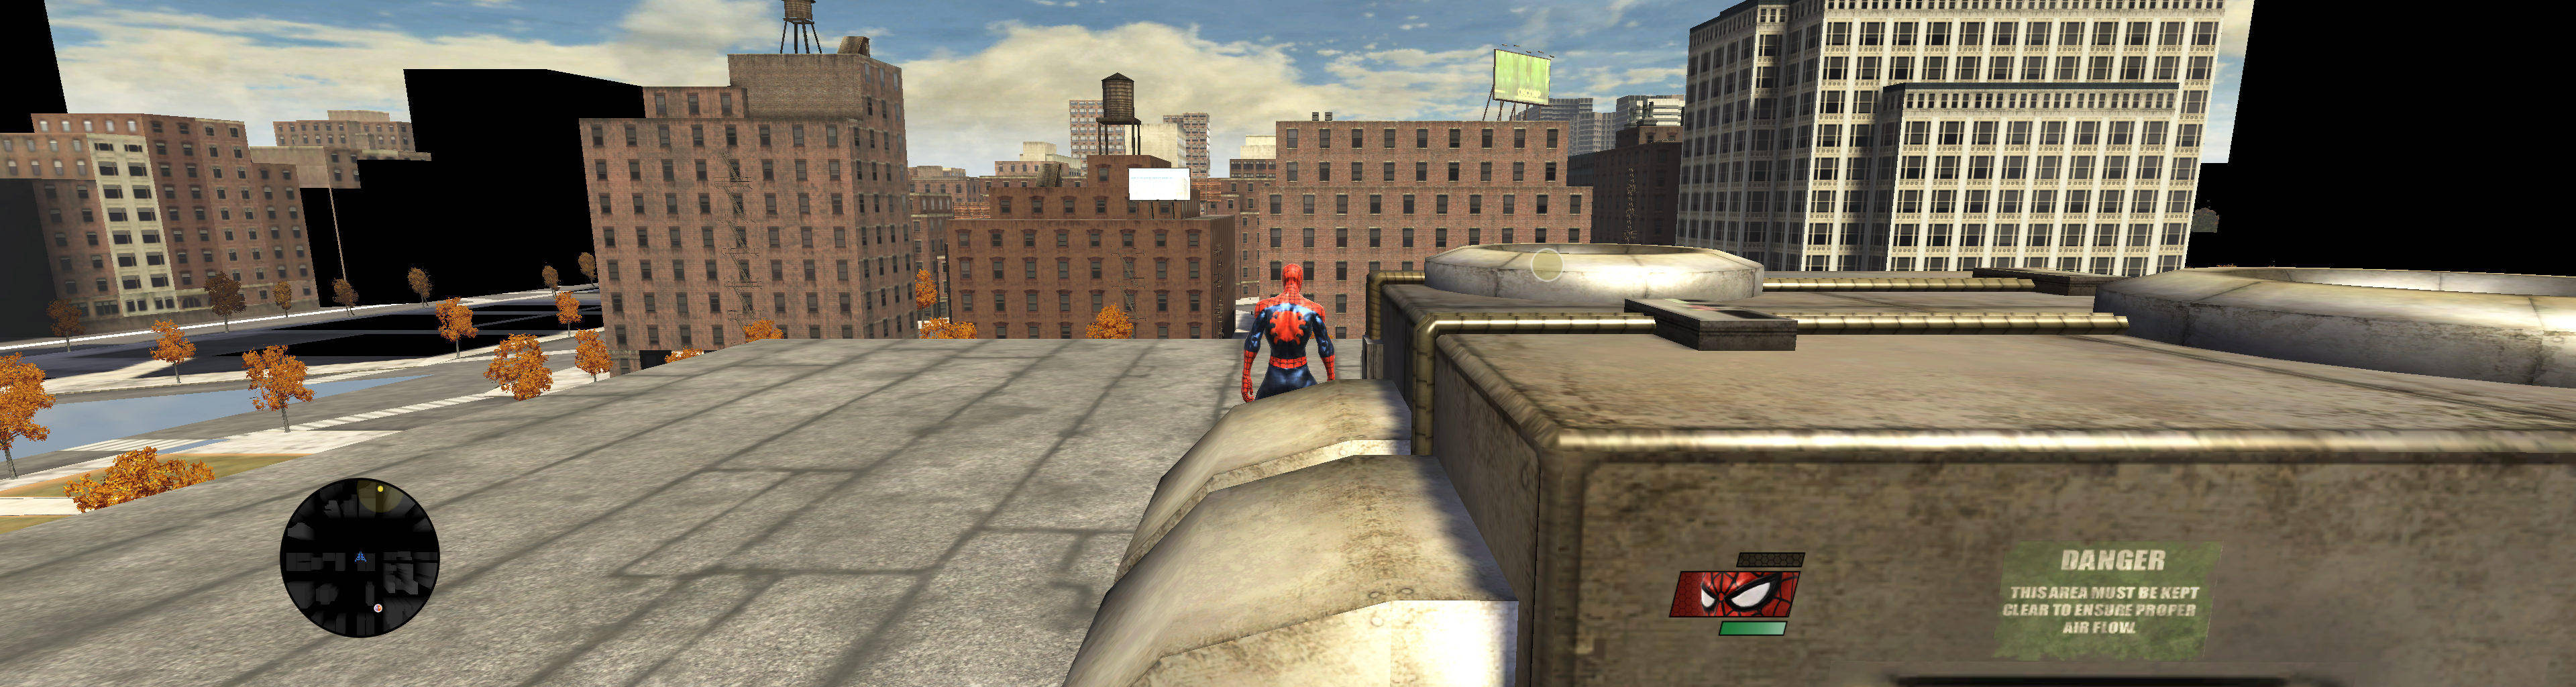 Spider-ManWoS-fixedFOV.jpg